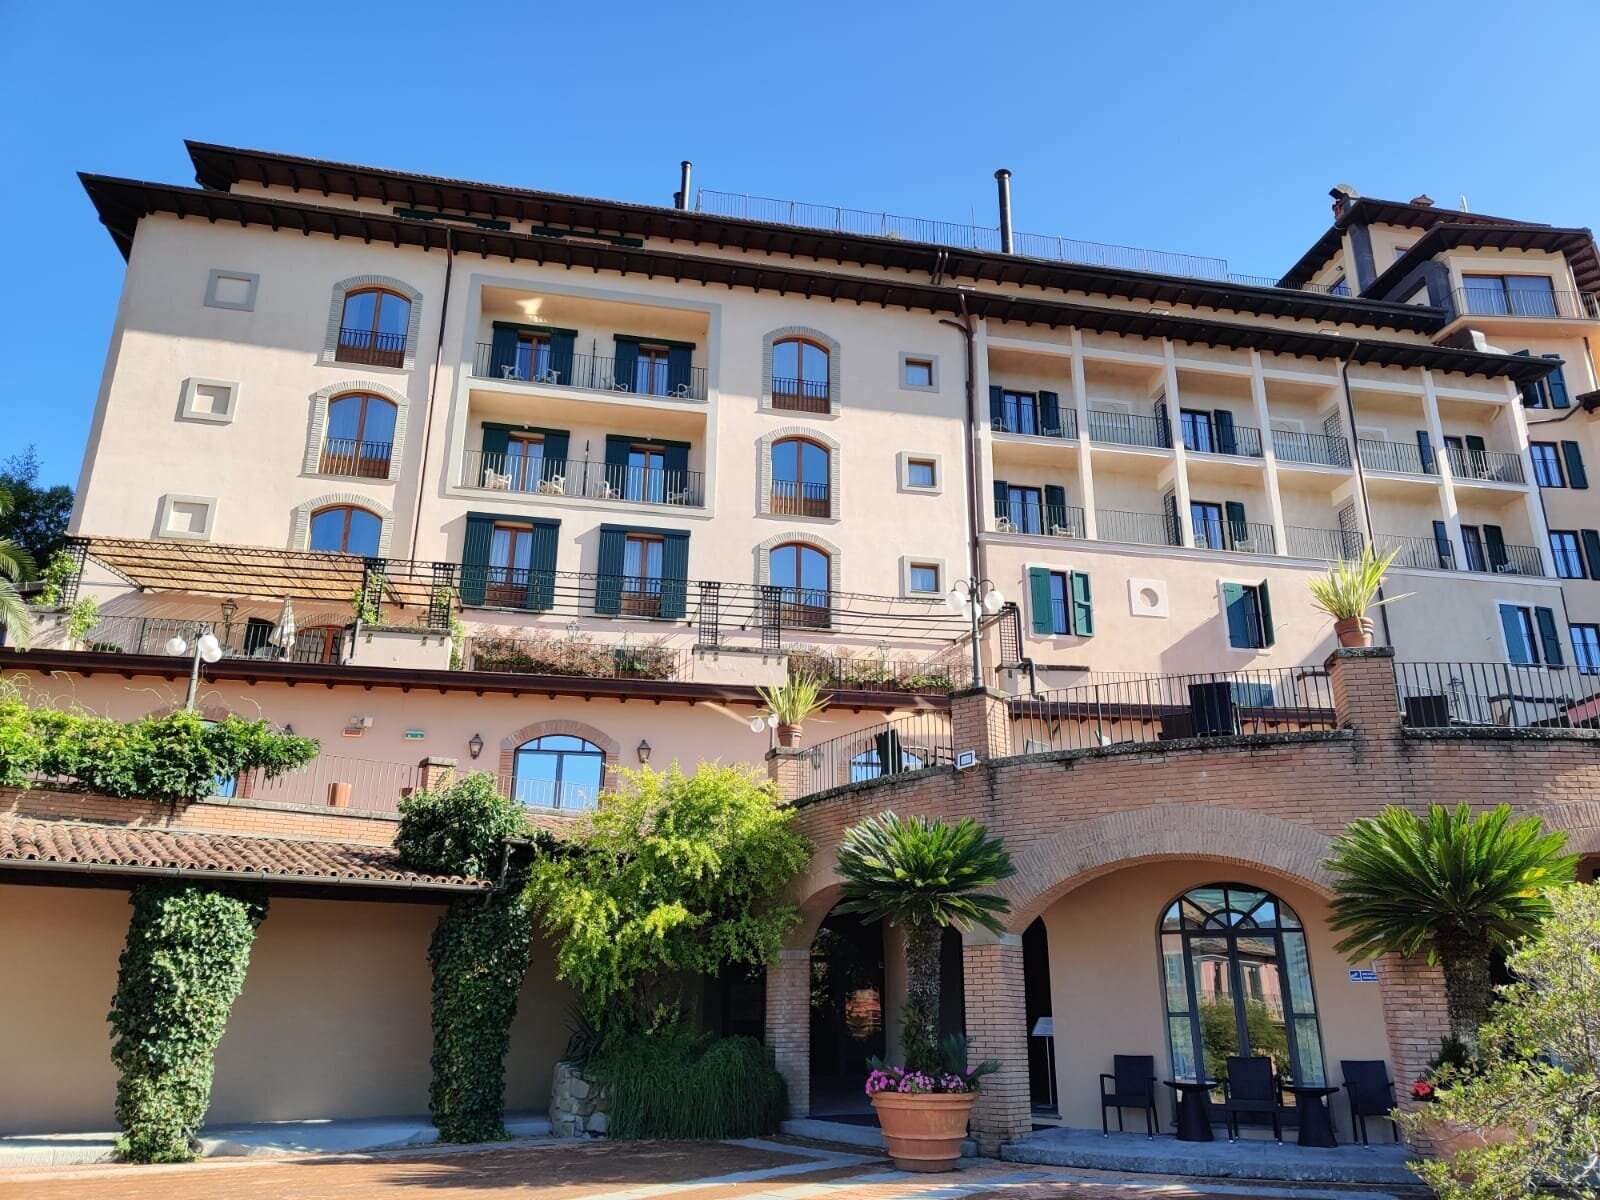 Renaissance Tuscany Il Ciocco Resort and Spa